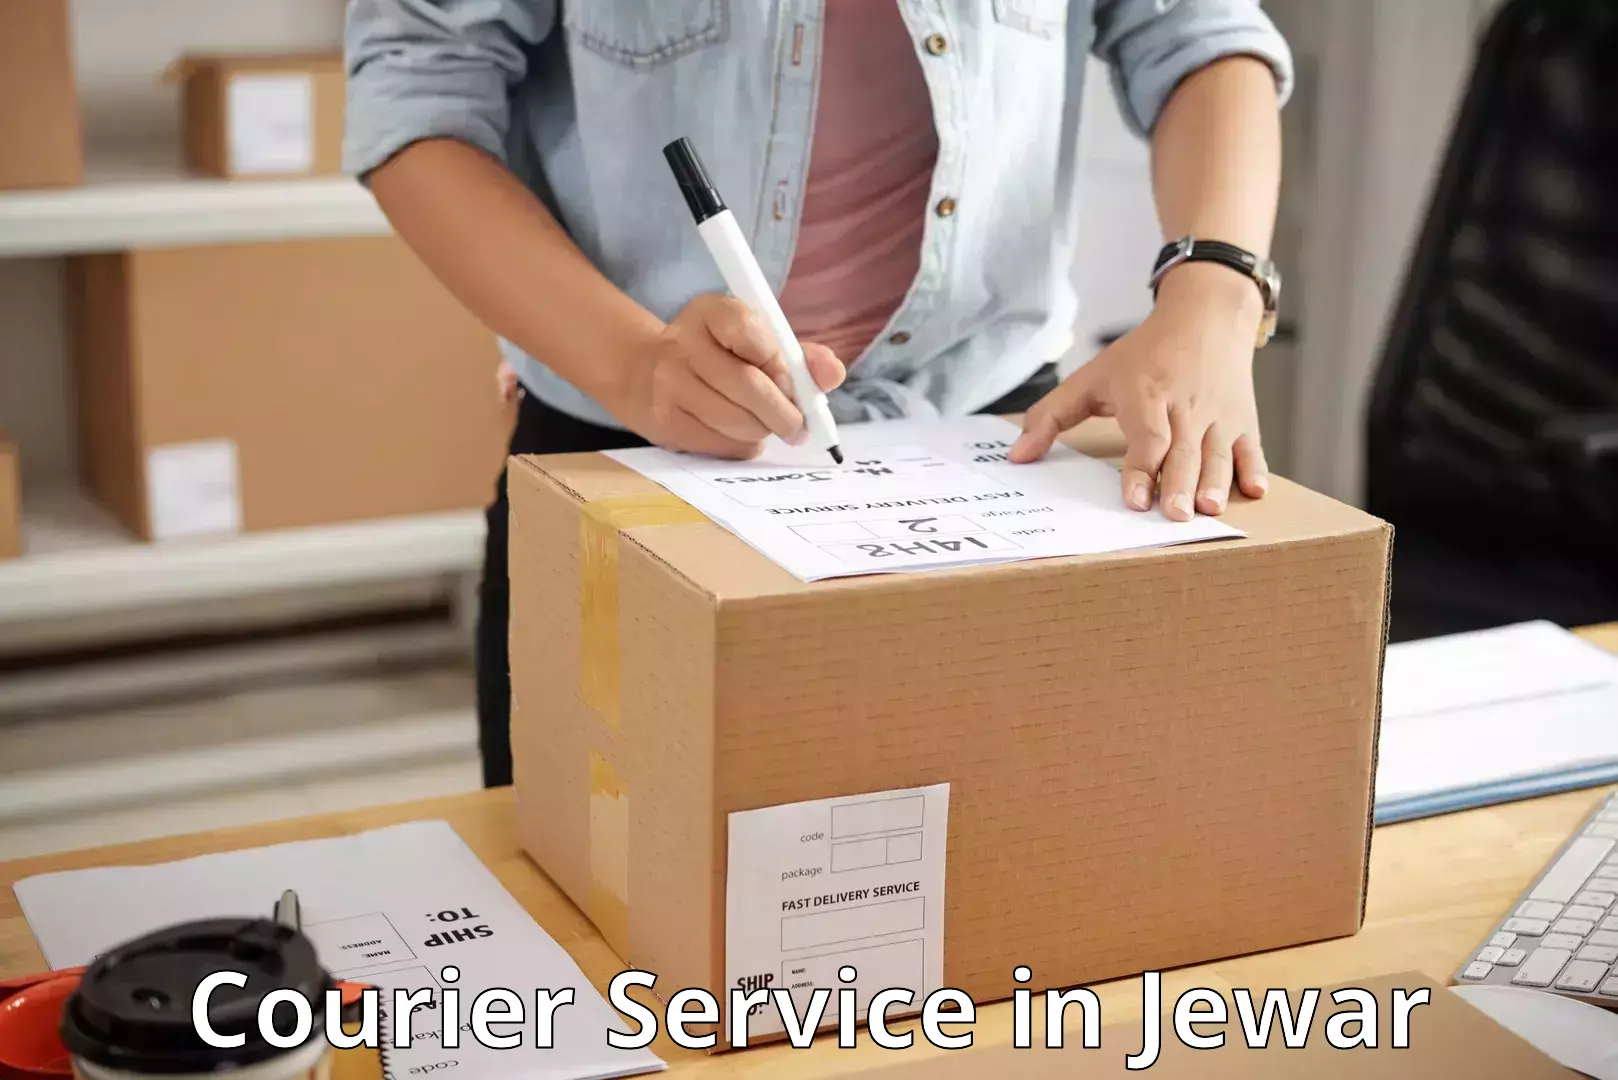 Premium courier solutions in Jewar